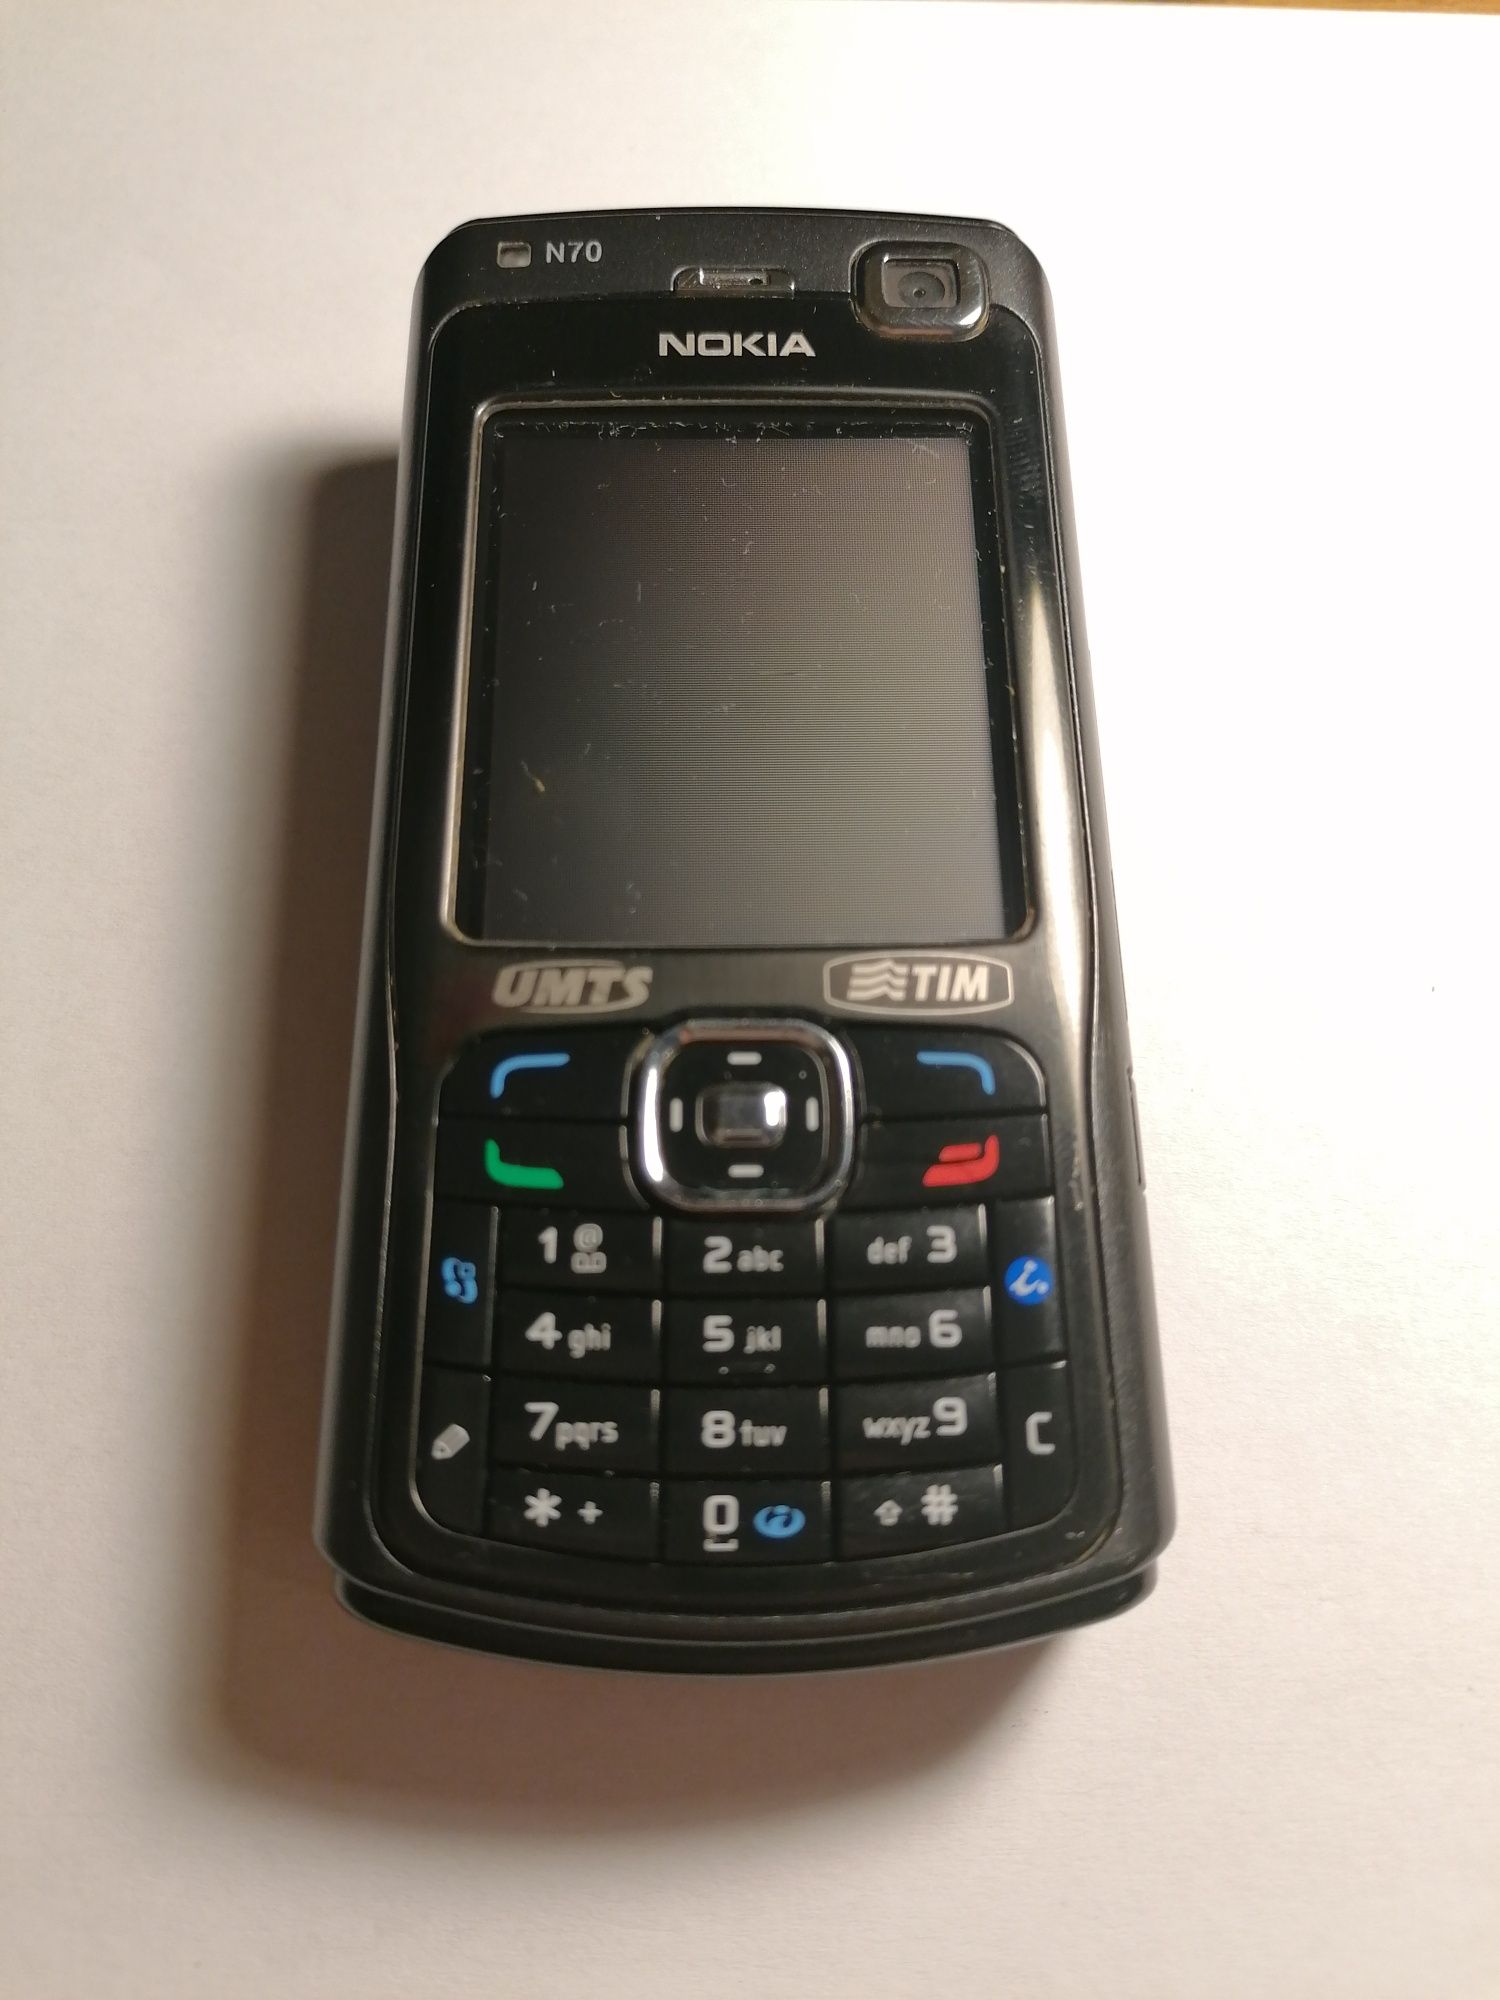 Nokia N70 defect